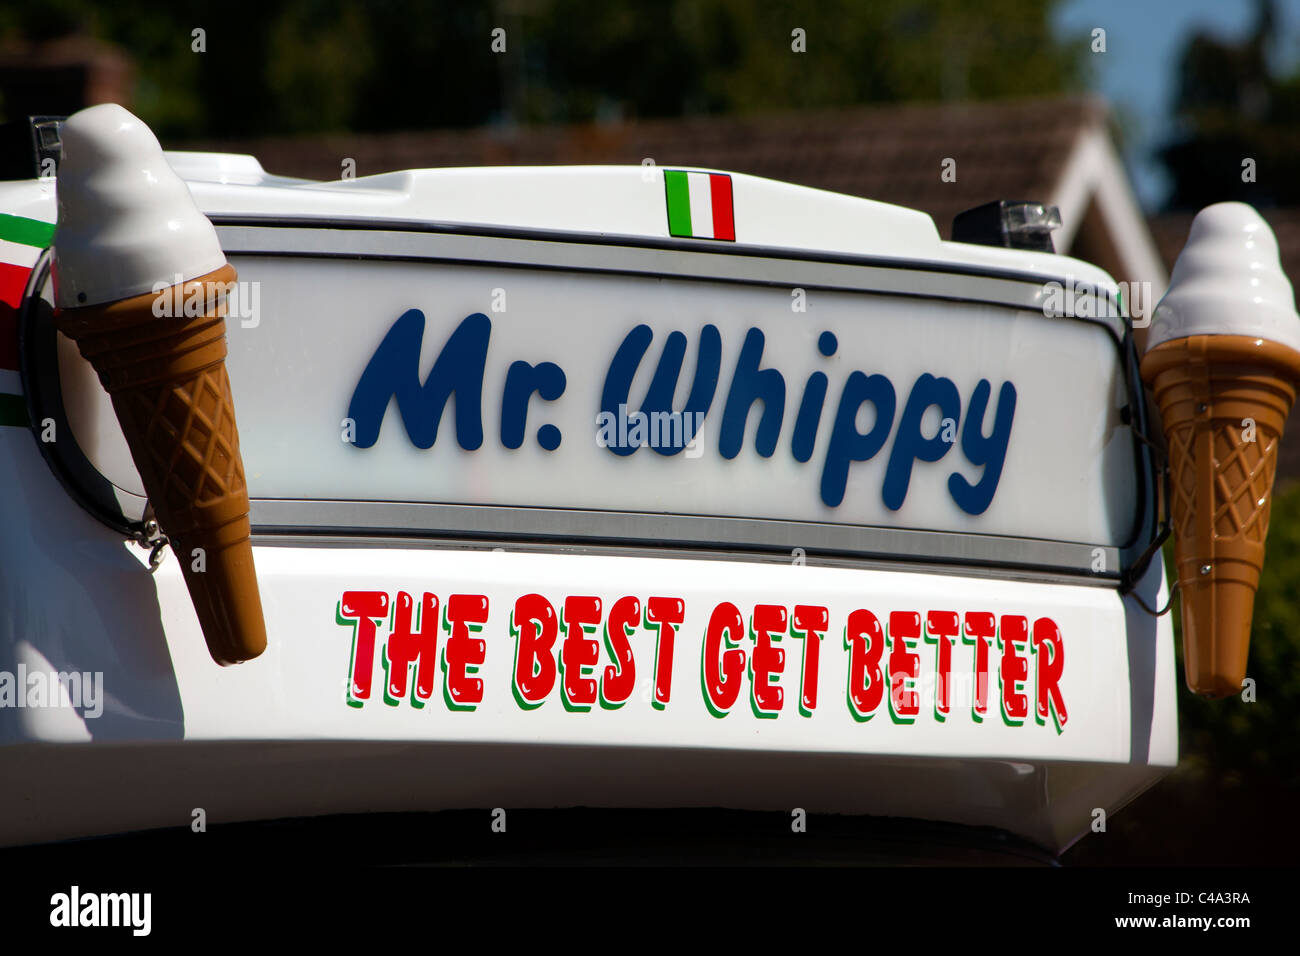 Mr Whippy ice cream van with icecream cones. Slogan says 'The best get better' Stock Photo